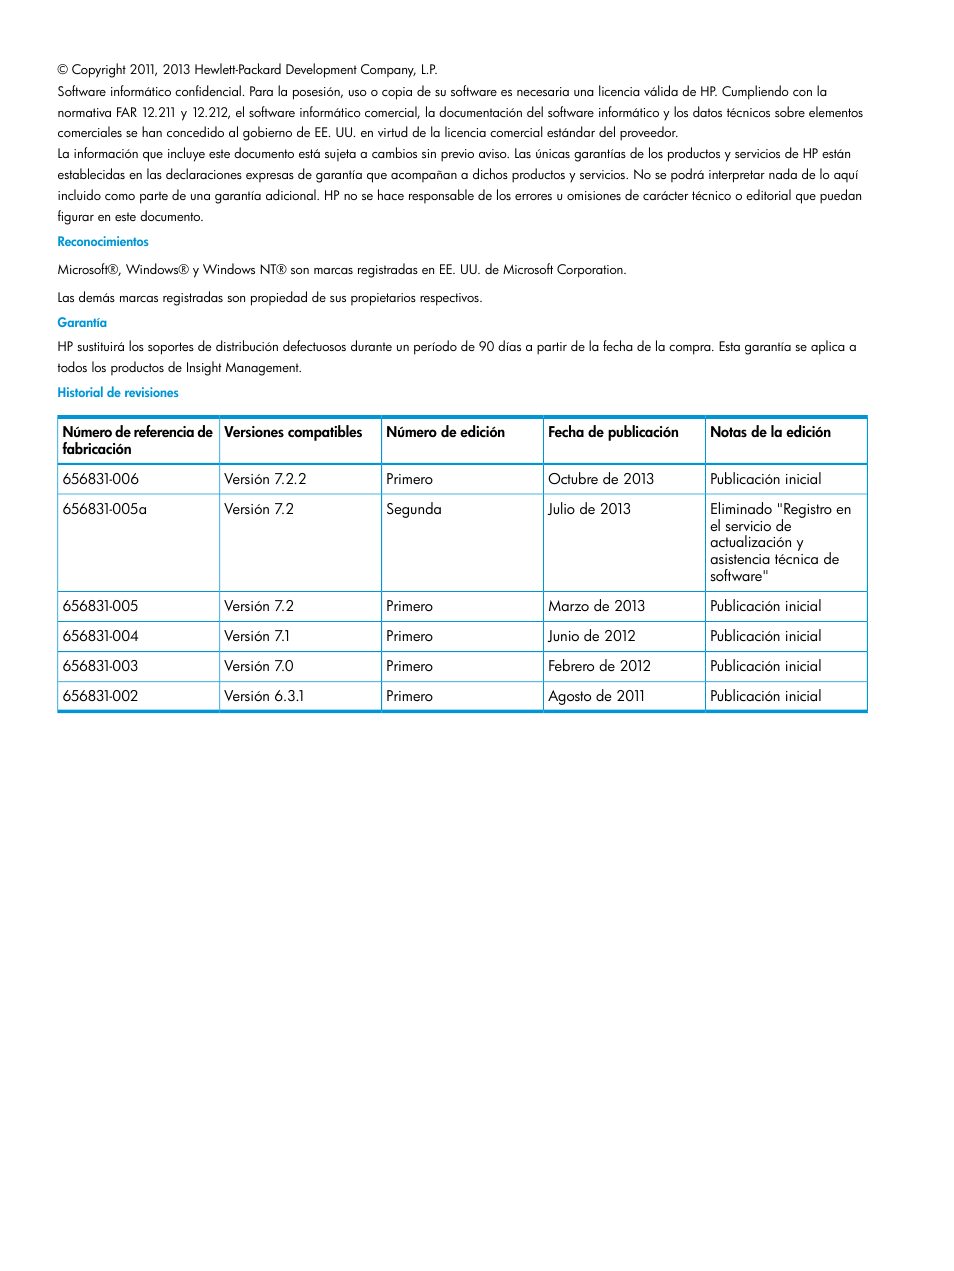 HP Software HP Insight Management Manual del usuario | Página 2 / 124